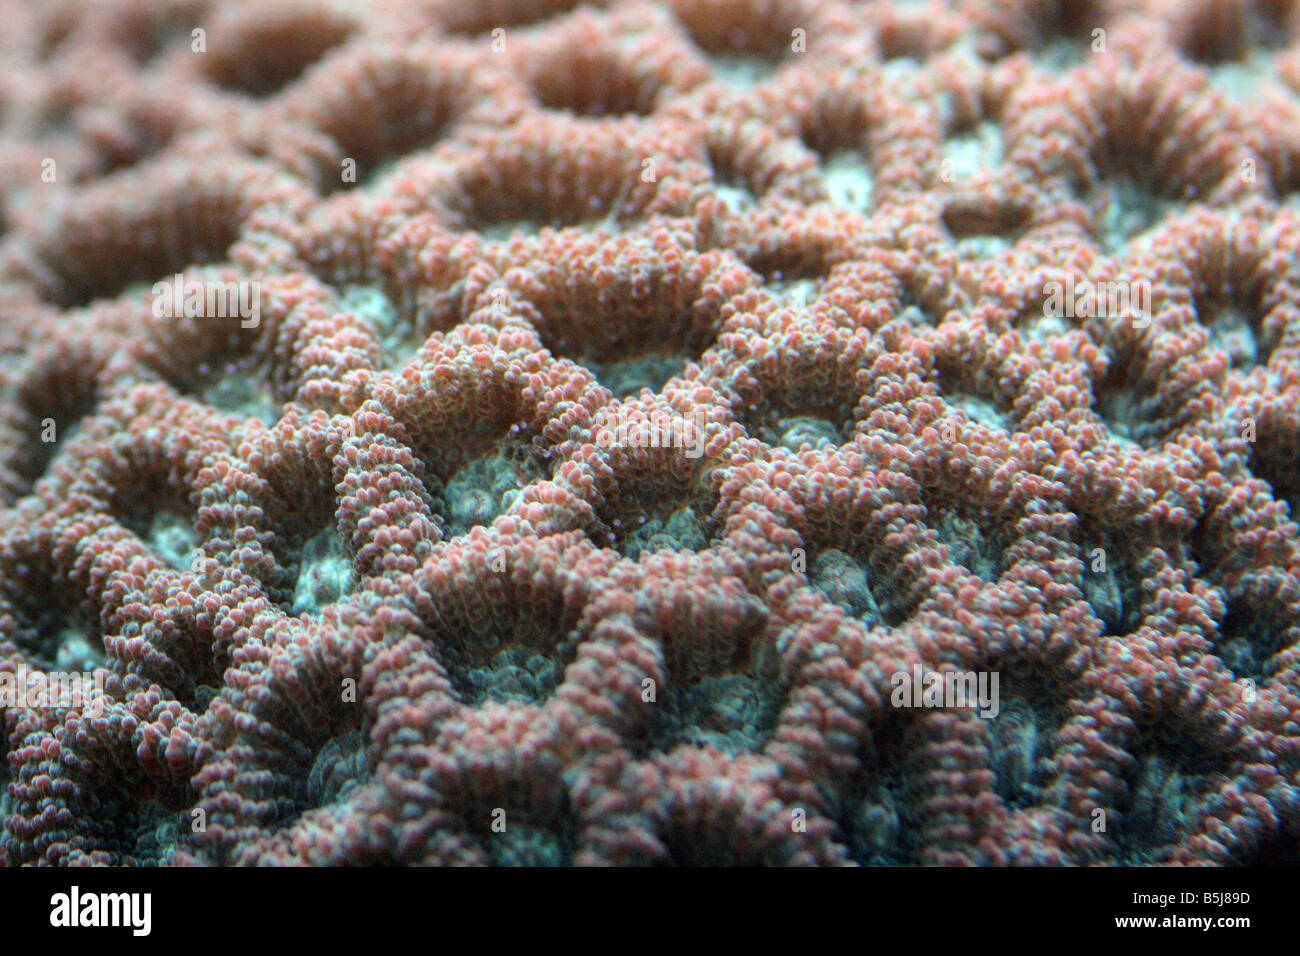 Macro image of favia (brain) coral Stock Photo